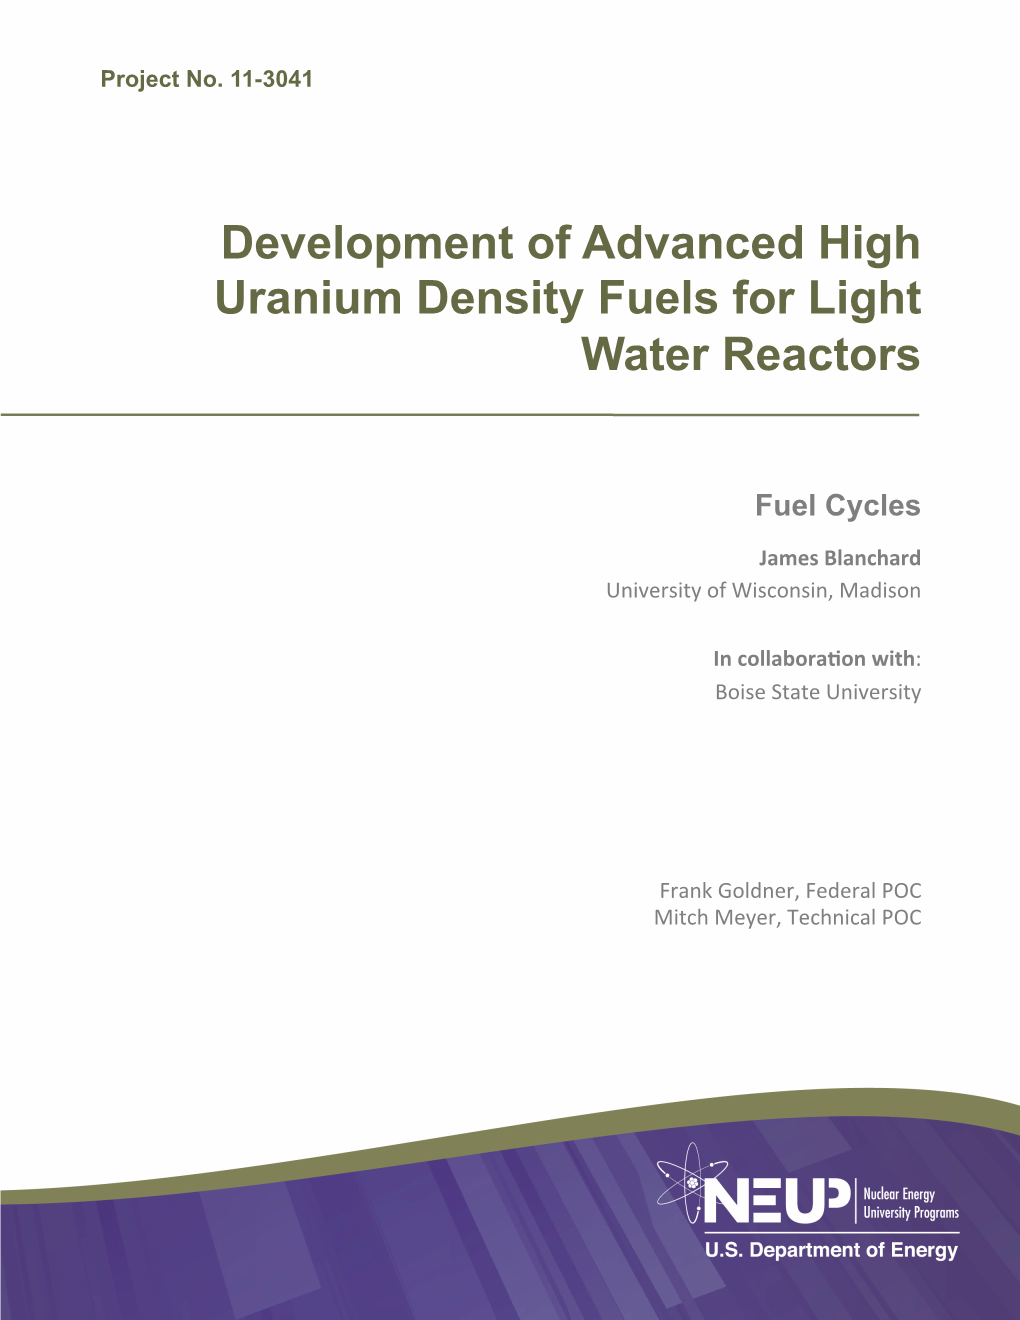 Development of Advanced High Uranium Density Fuels for Light Water Reactors